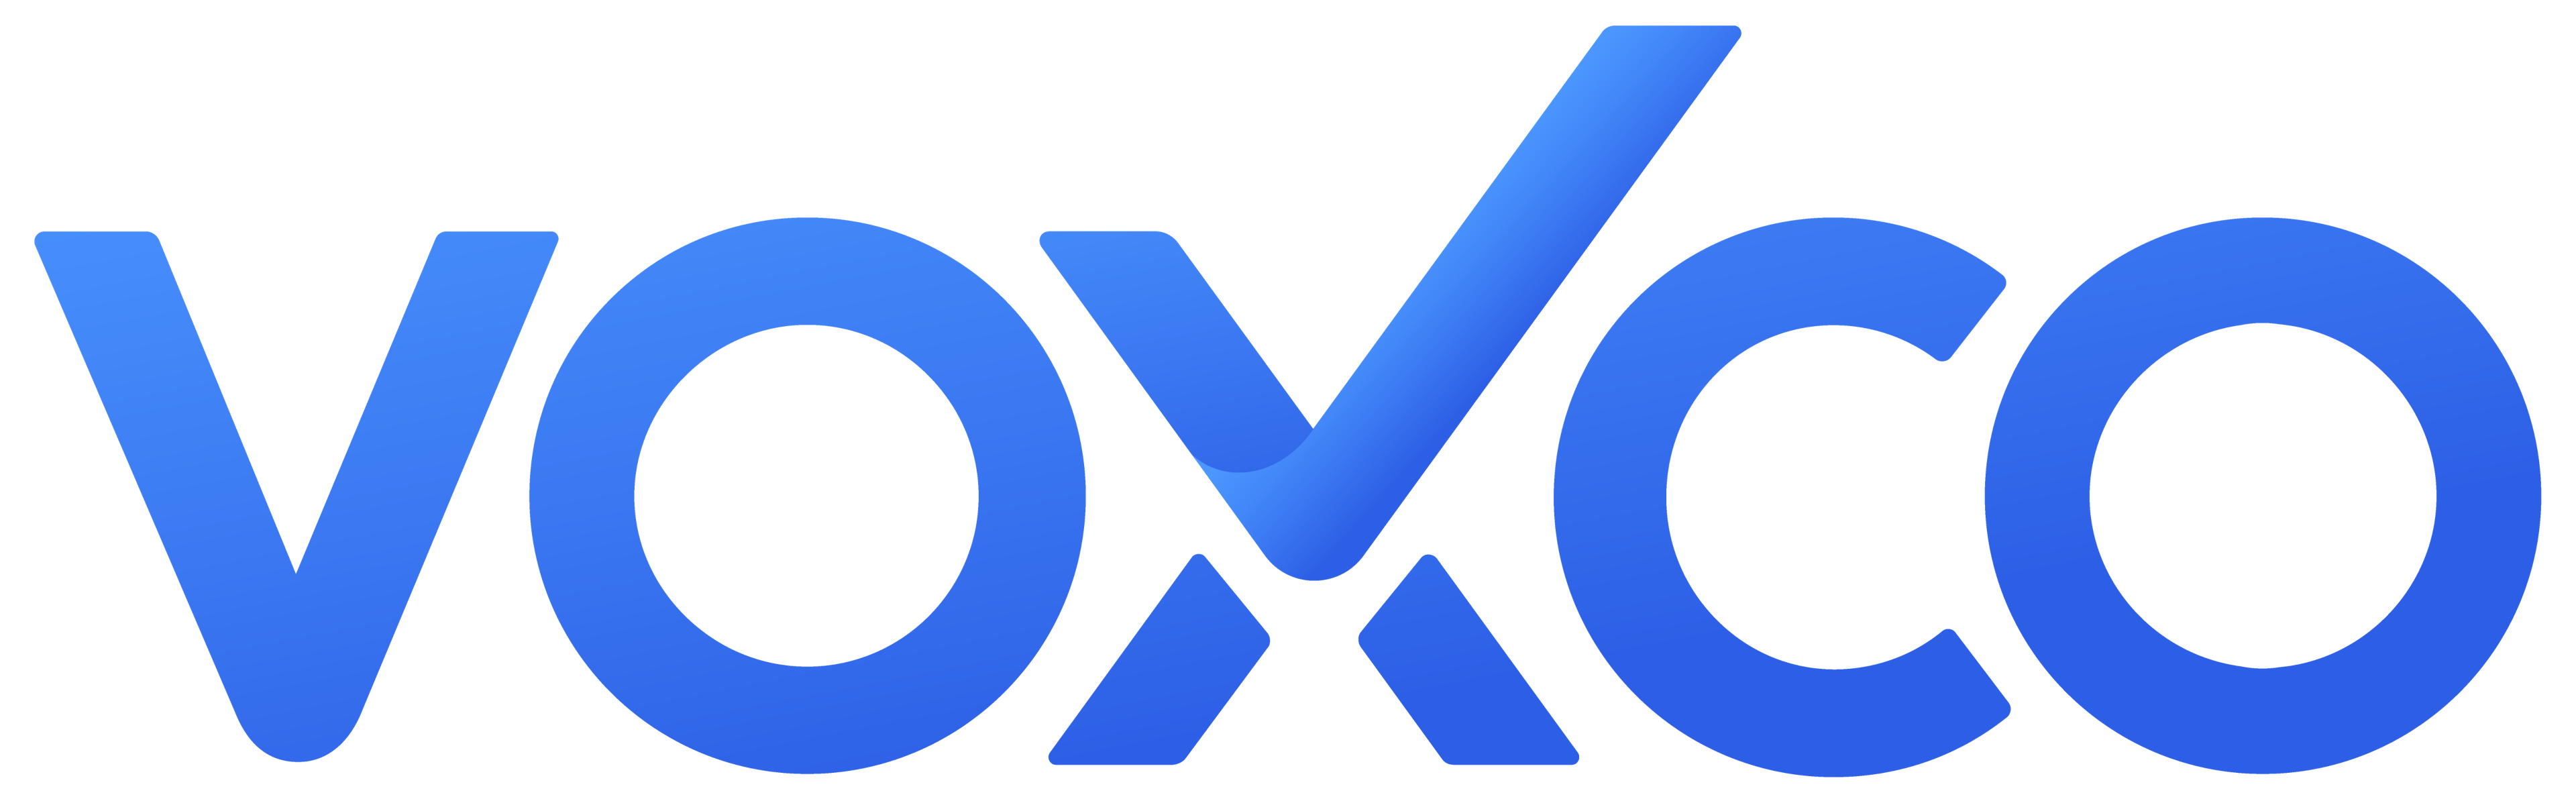 Voxco Online Logo